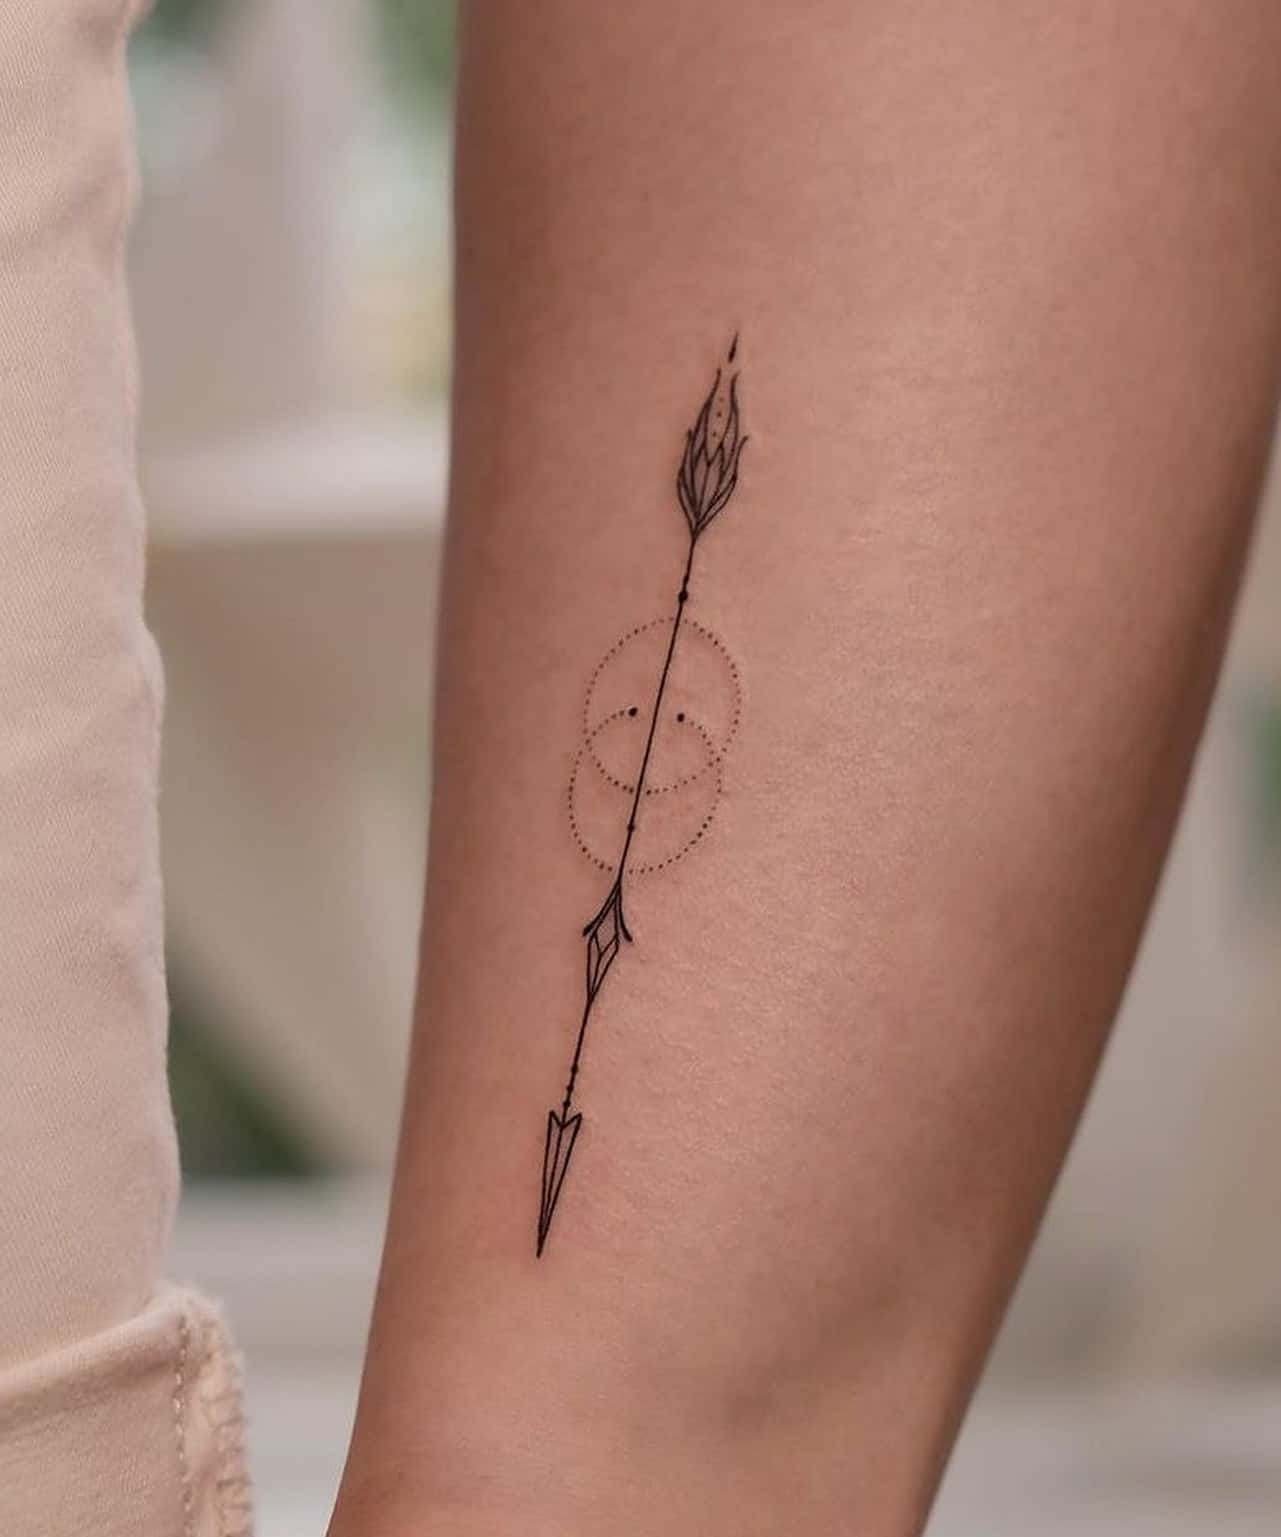 Straight arrow tattoo meaning